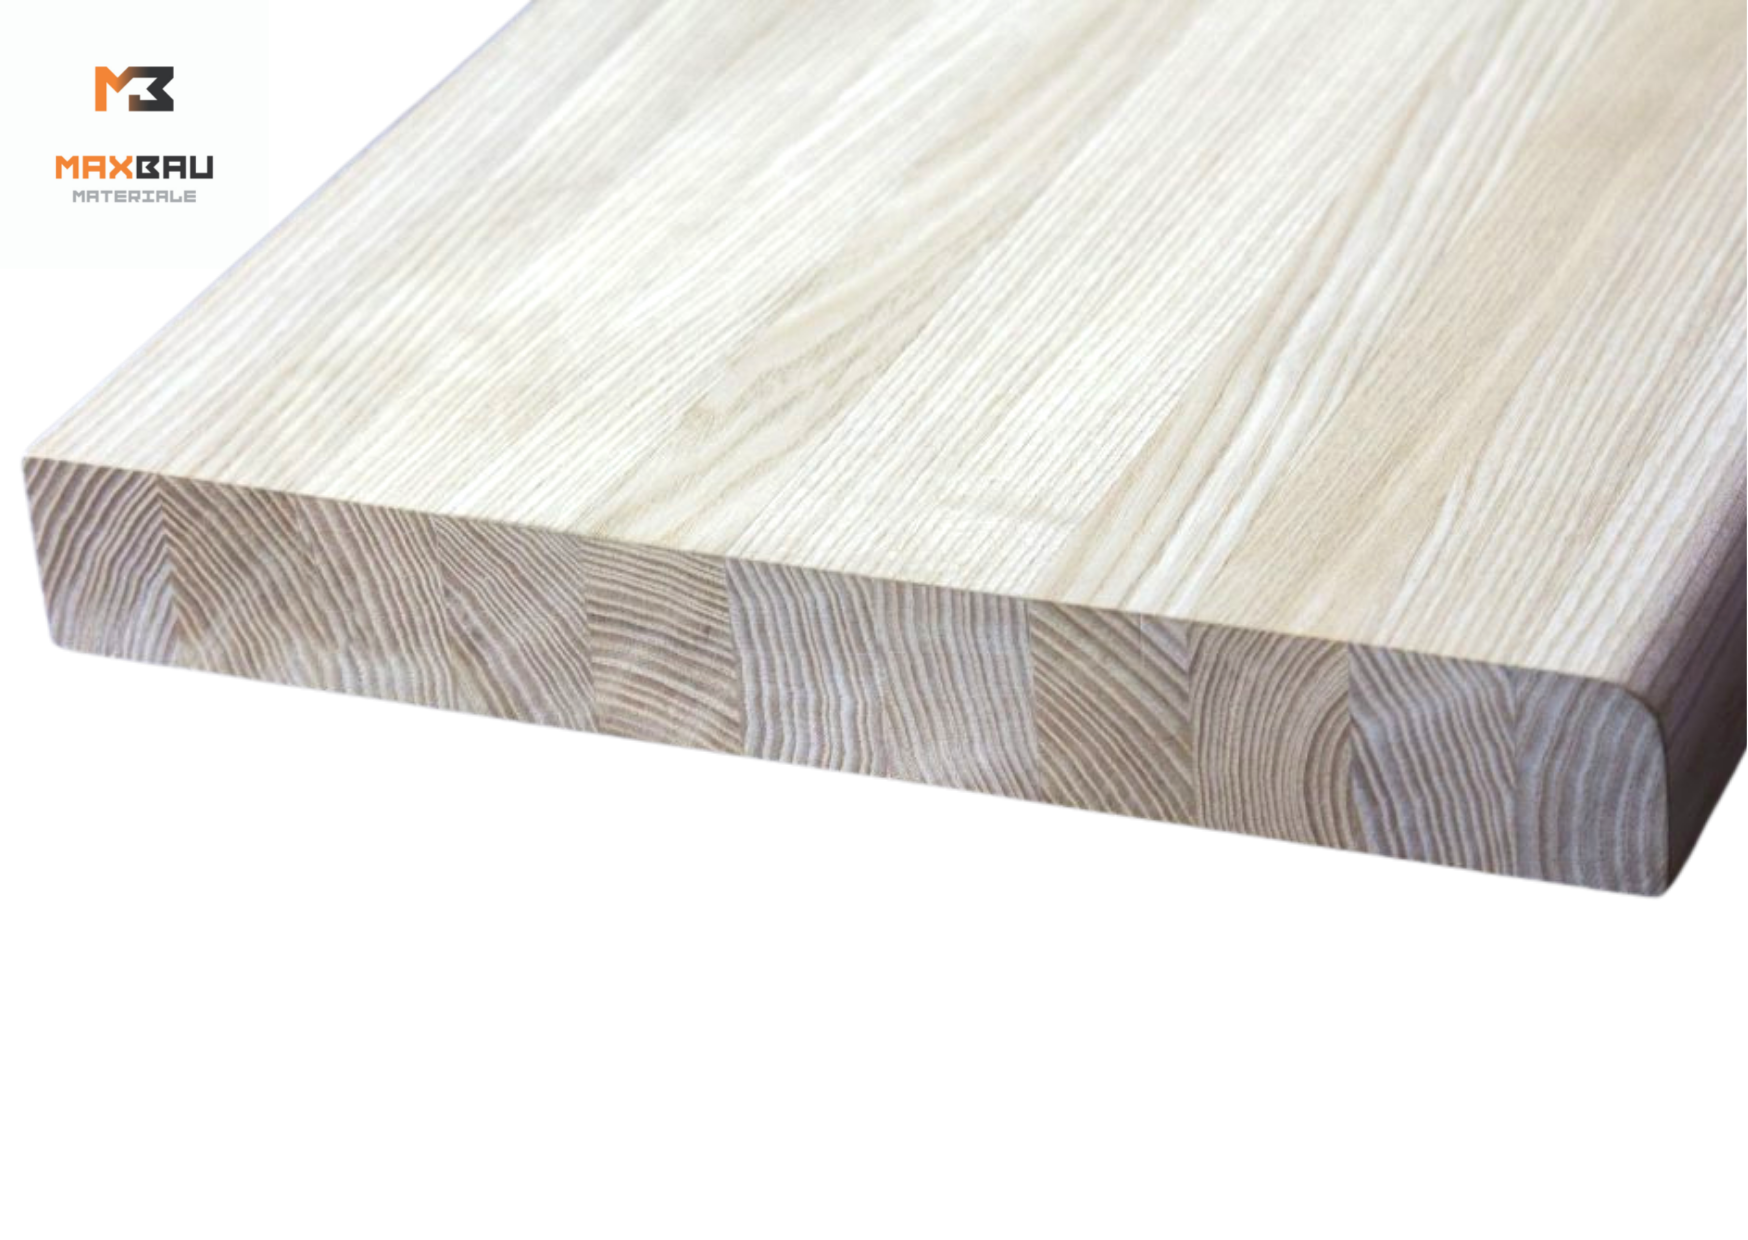 Plates of glued wood - MaxBau wooden plate glued 2500 x 300 x 28 mm class AB, https:maxbau.ro